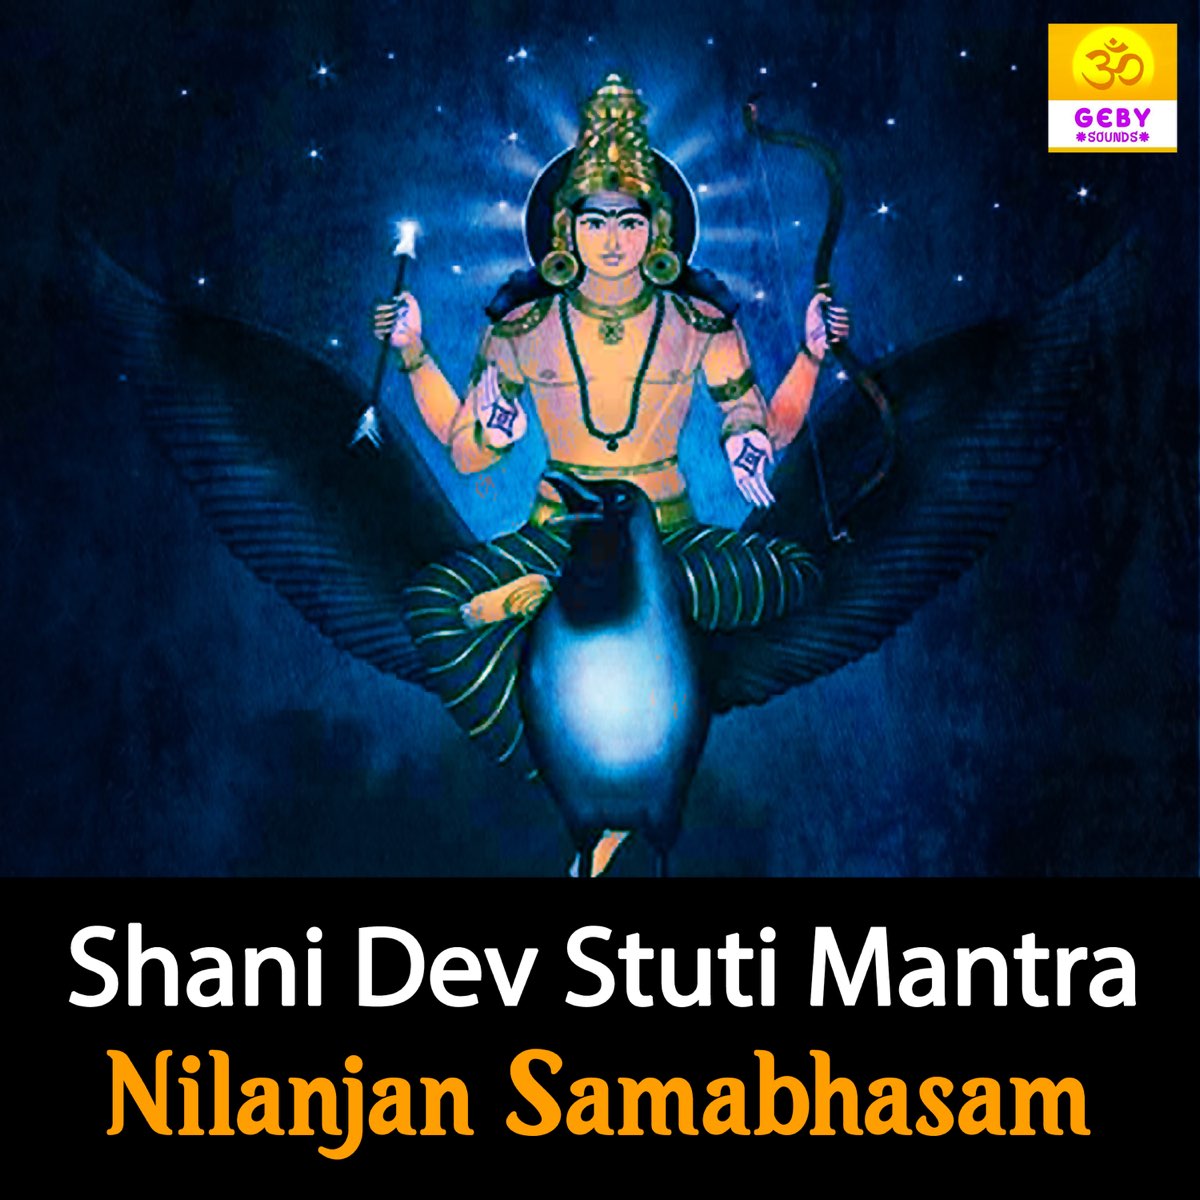 Shani Dev Stuti Mantra - Nilanjan Samabhasam - Single by Jatin on Apple  Music